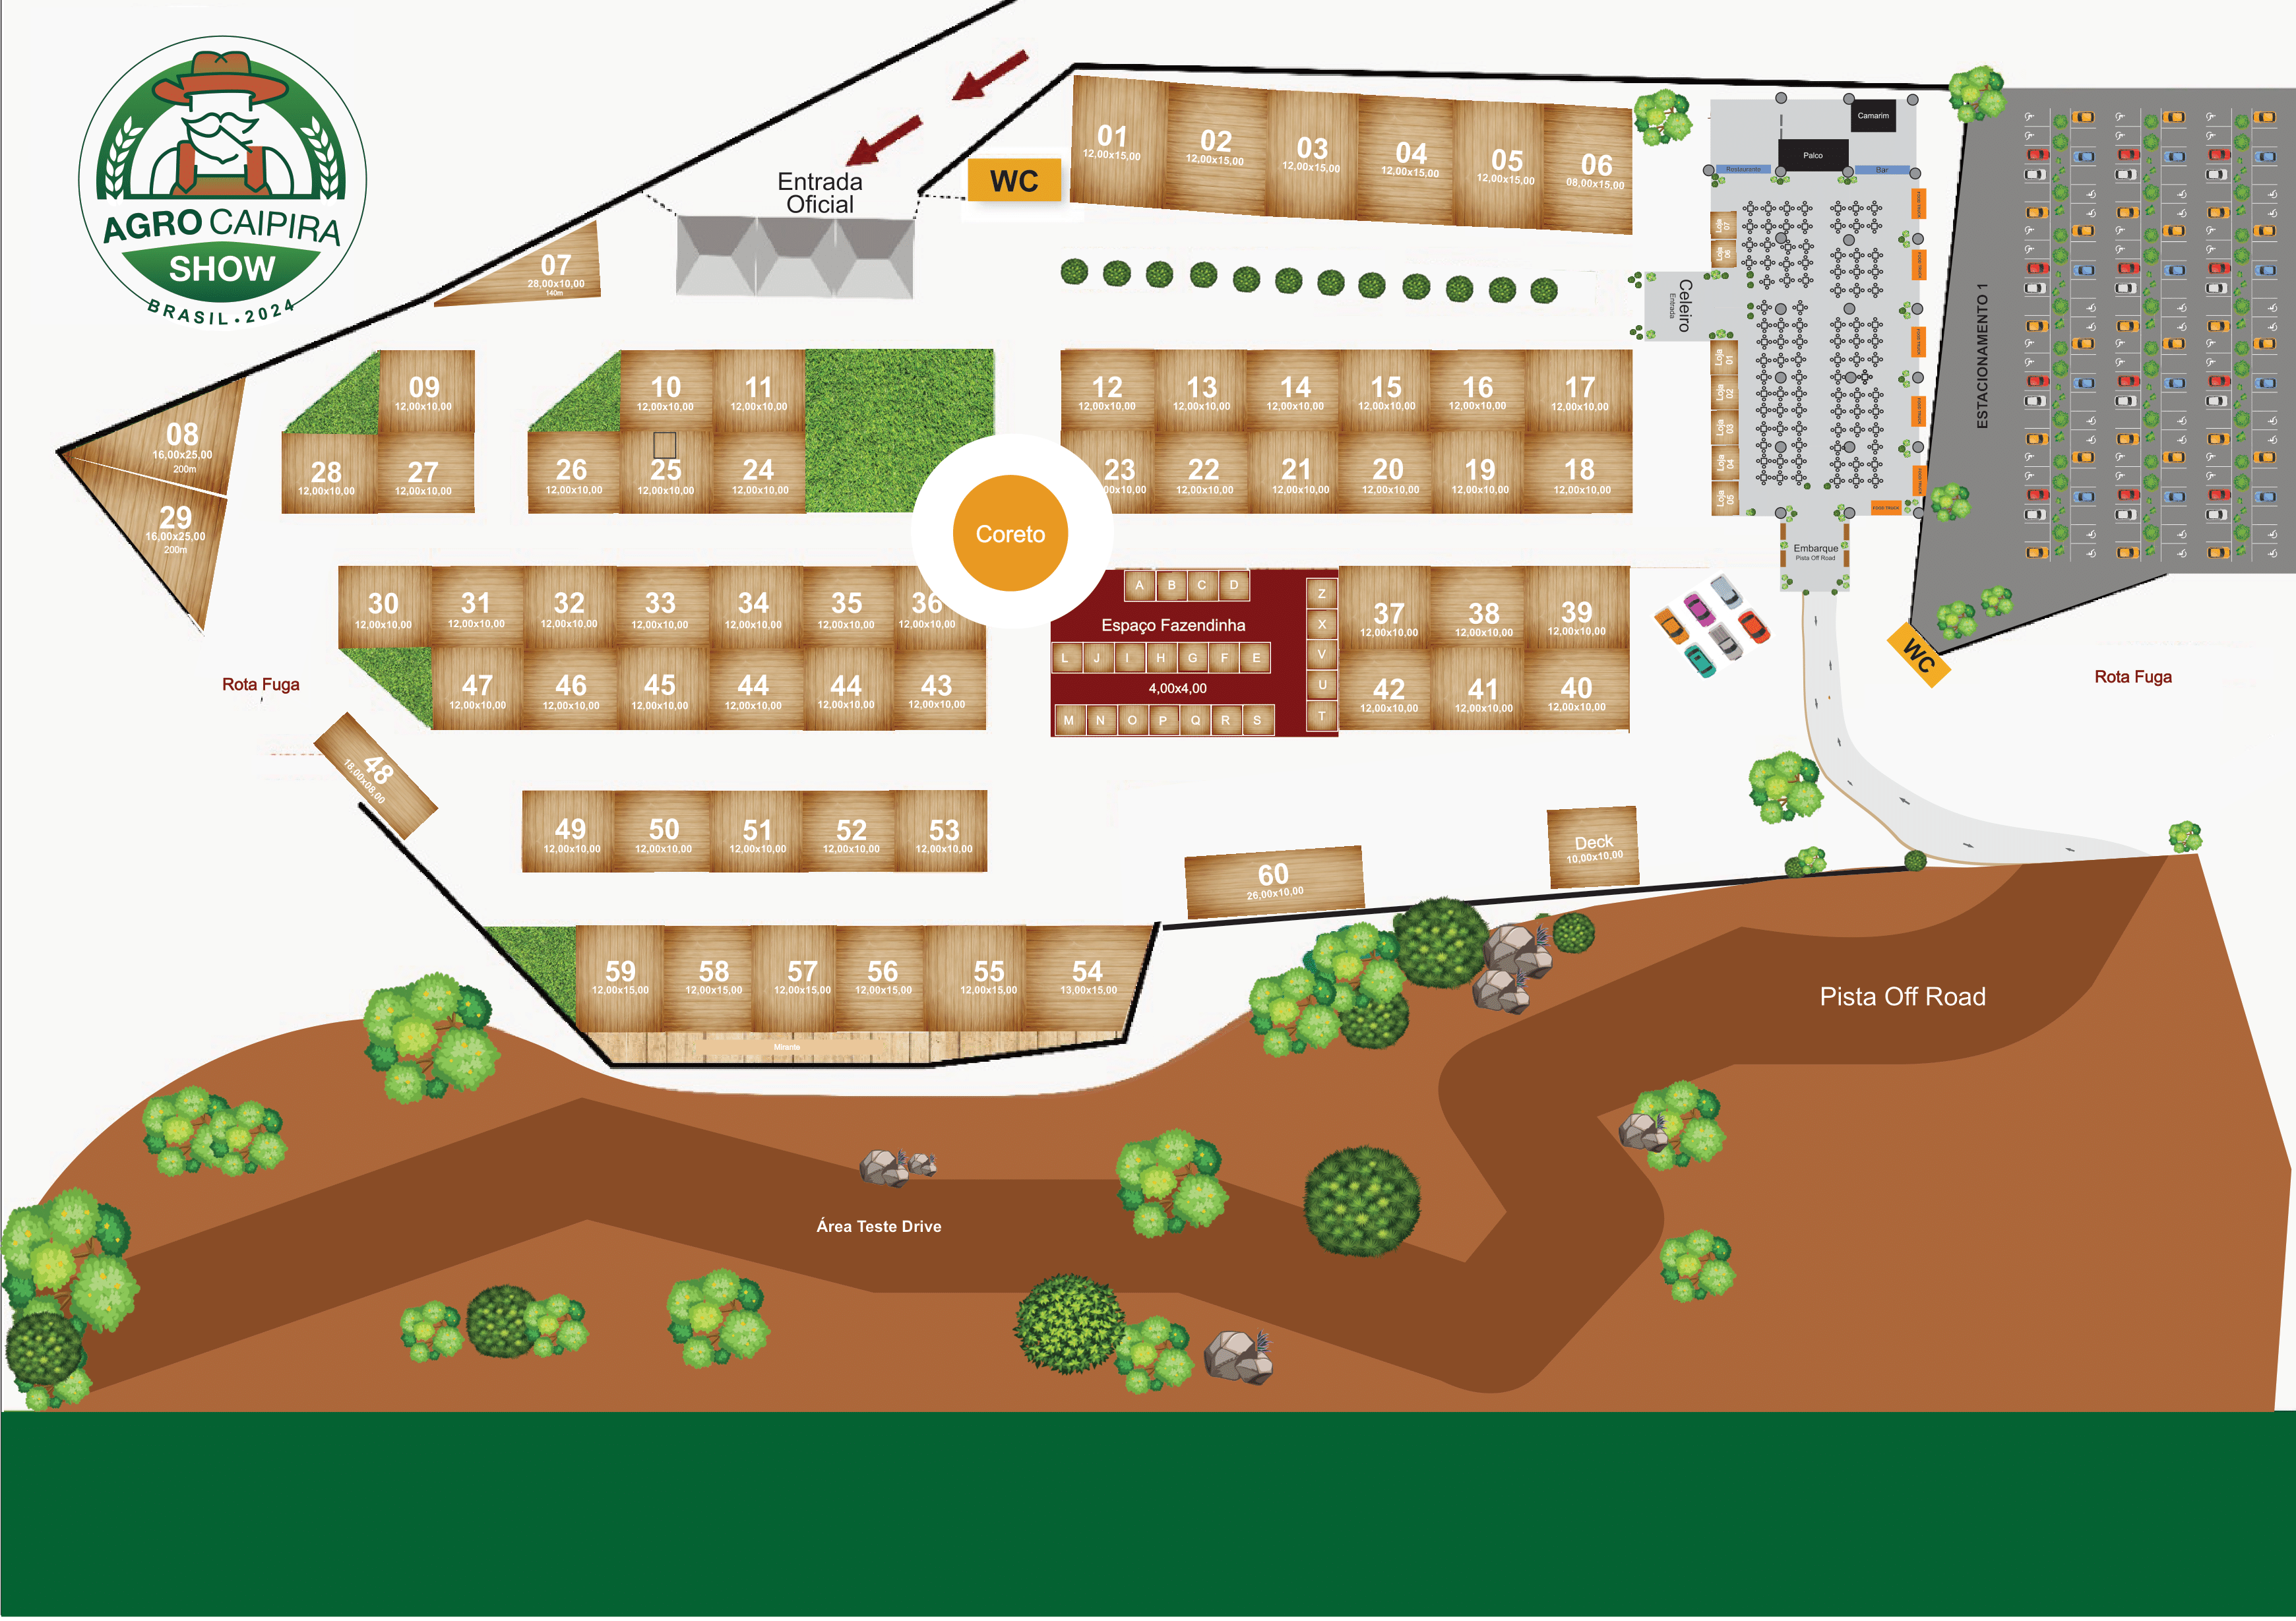 Mapa do Agro Caipira Show